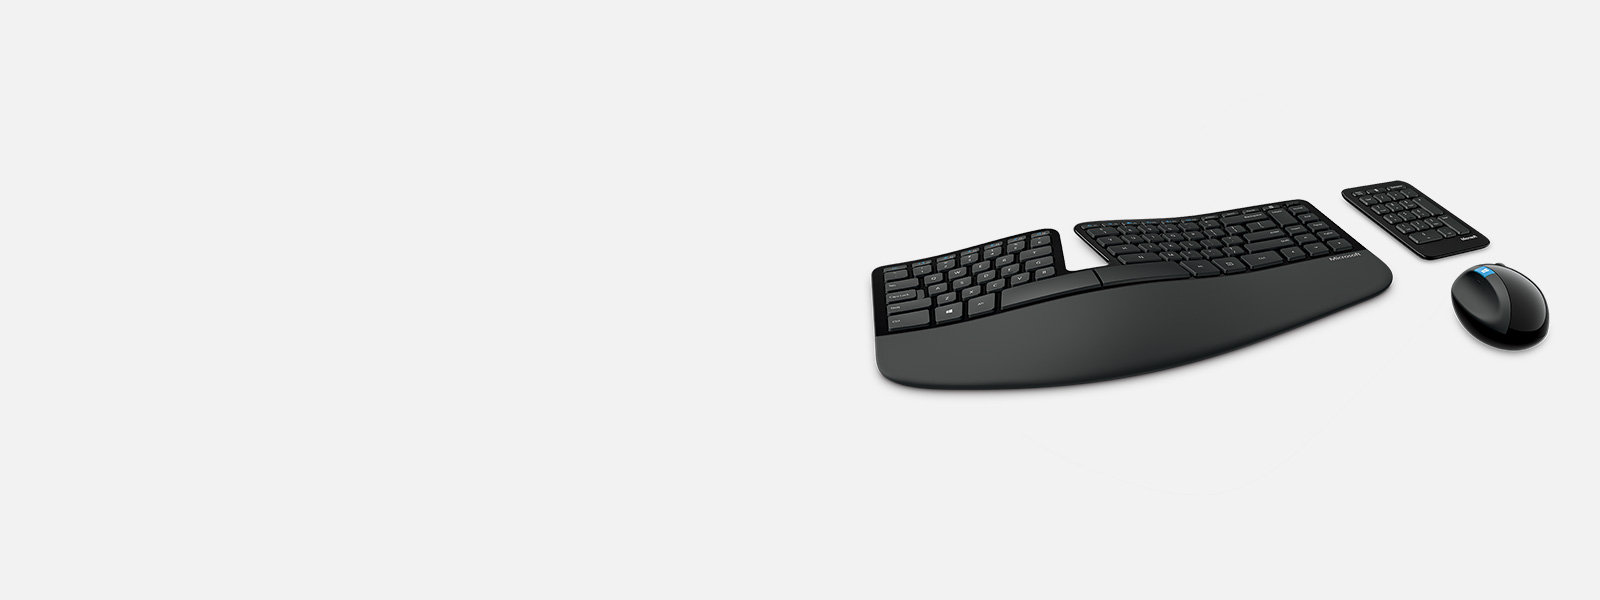 Sculpt Ergonomic Desktop Keyboard & Mouse Microsoft Accessories